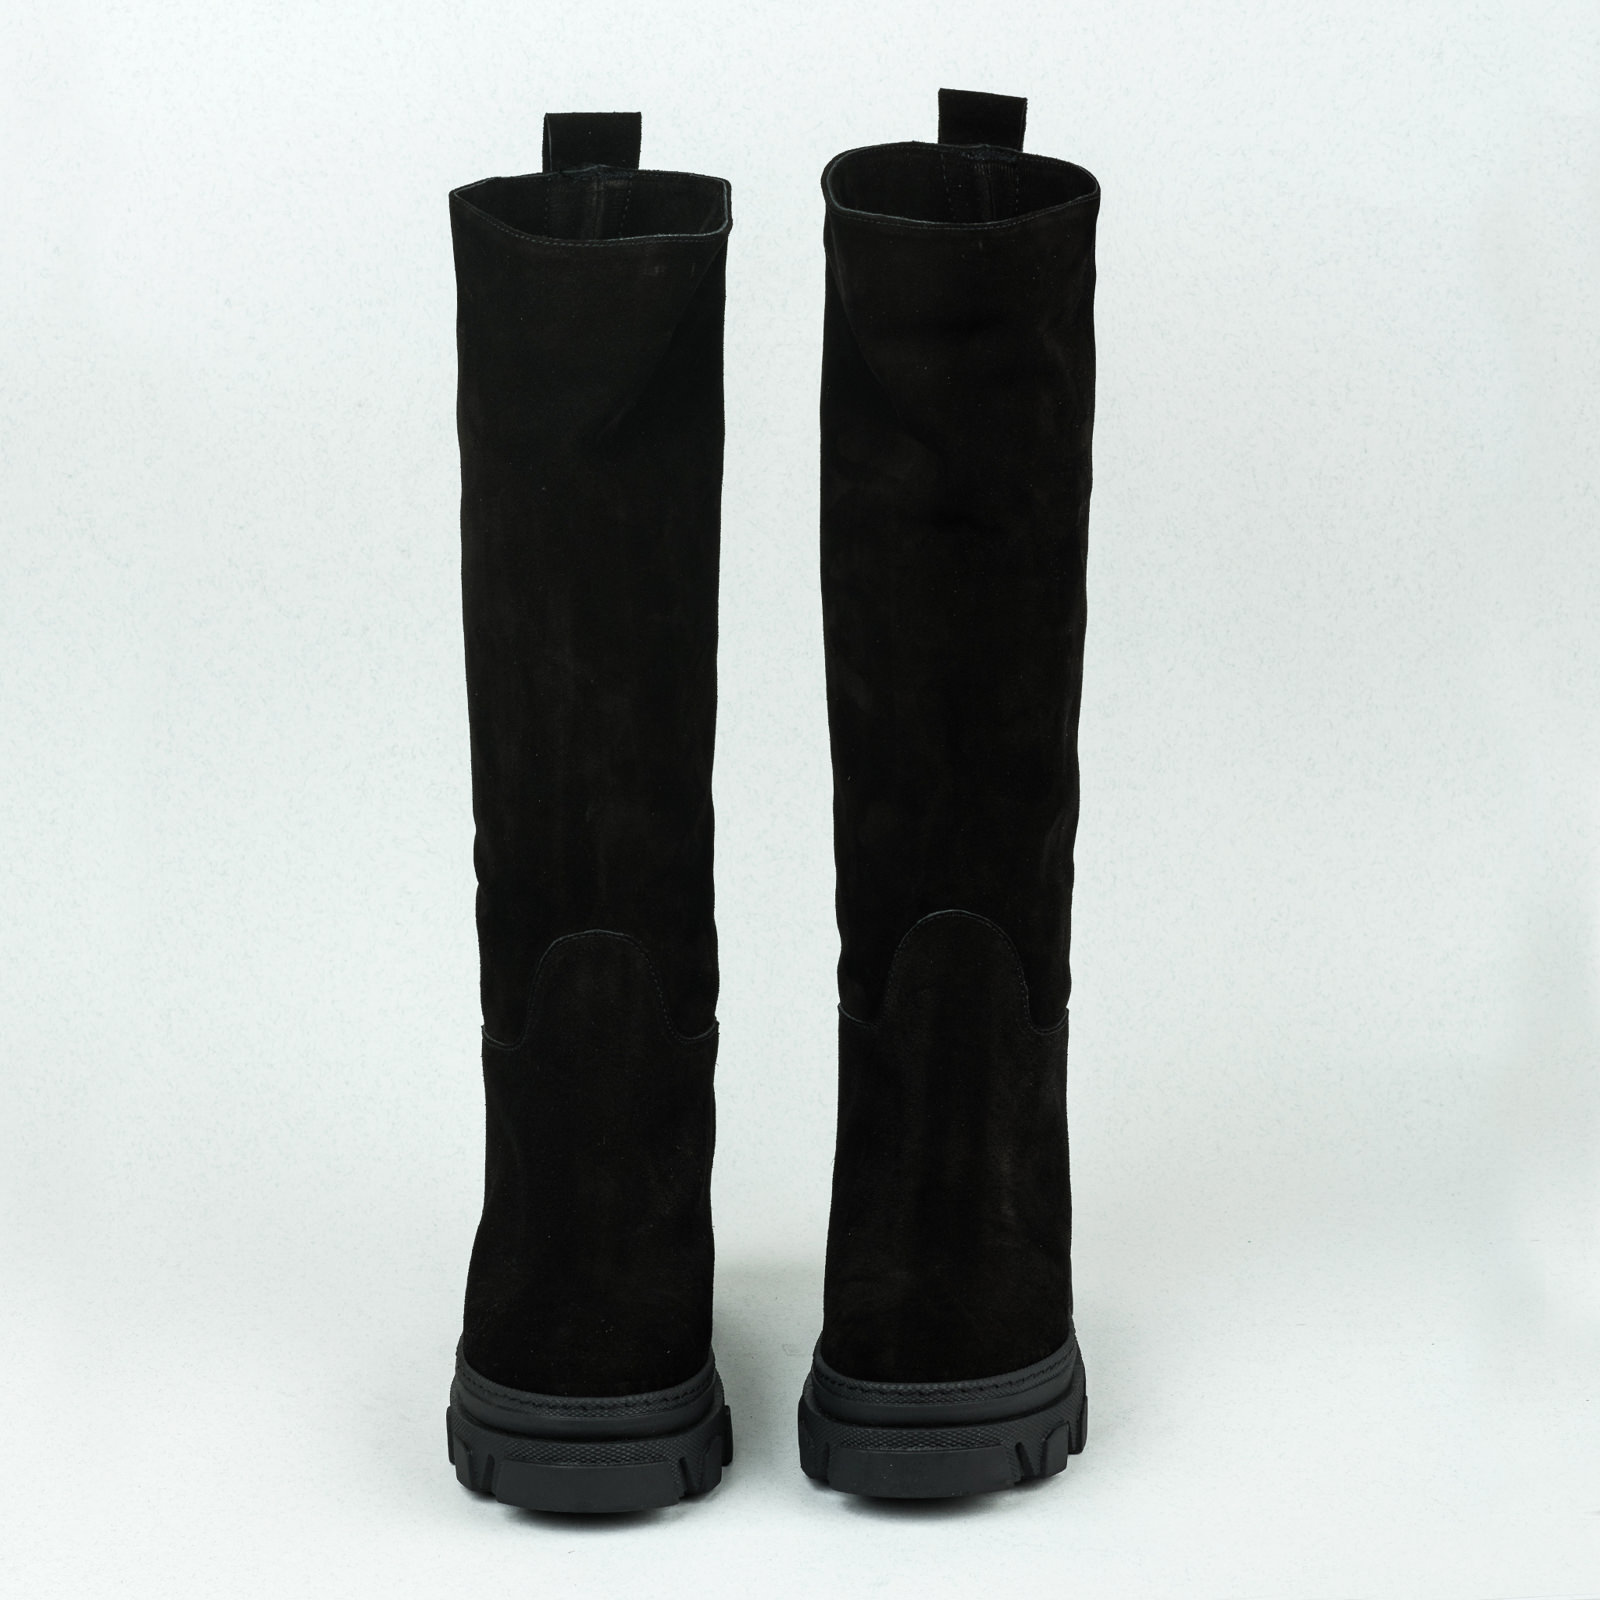 Leather WATERPROOF boots B127 - BLACK